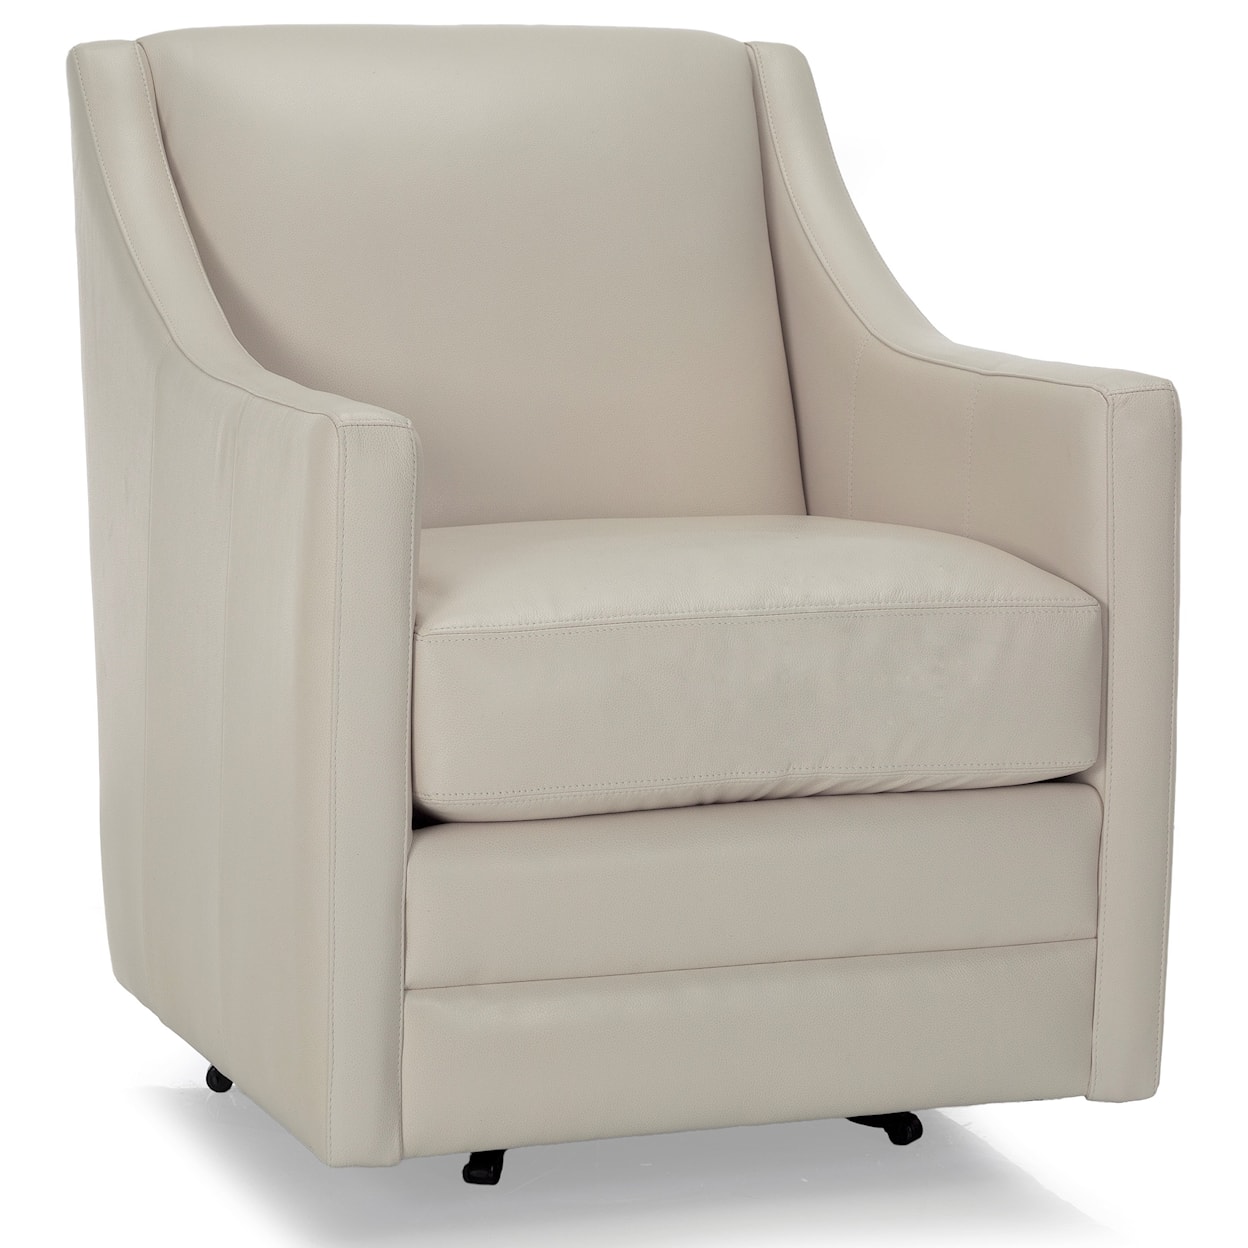 Decor-Rest 2443 Swivel Chair